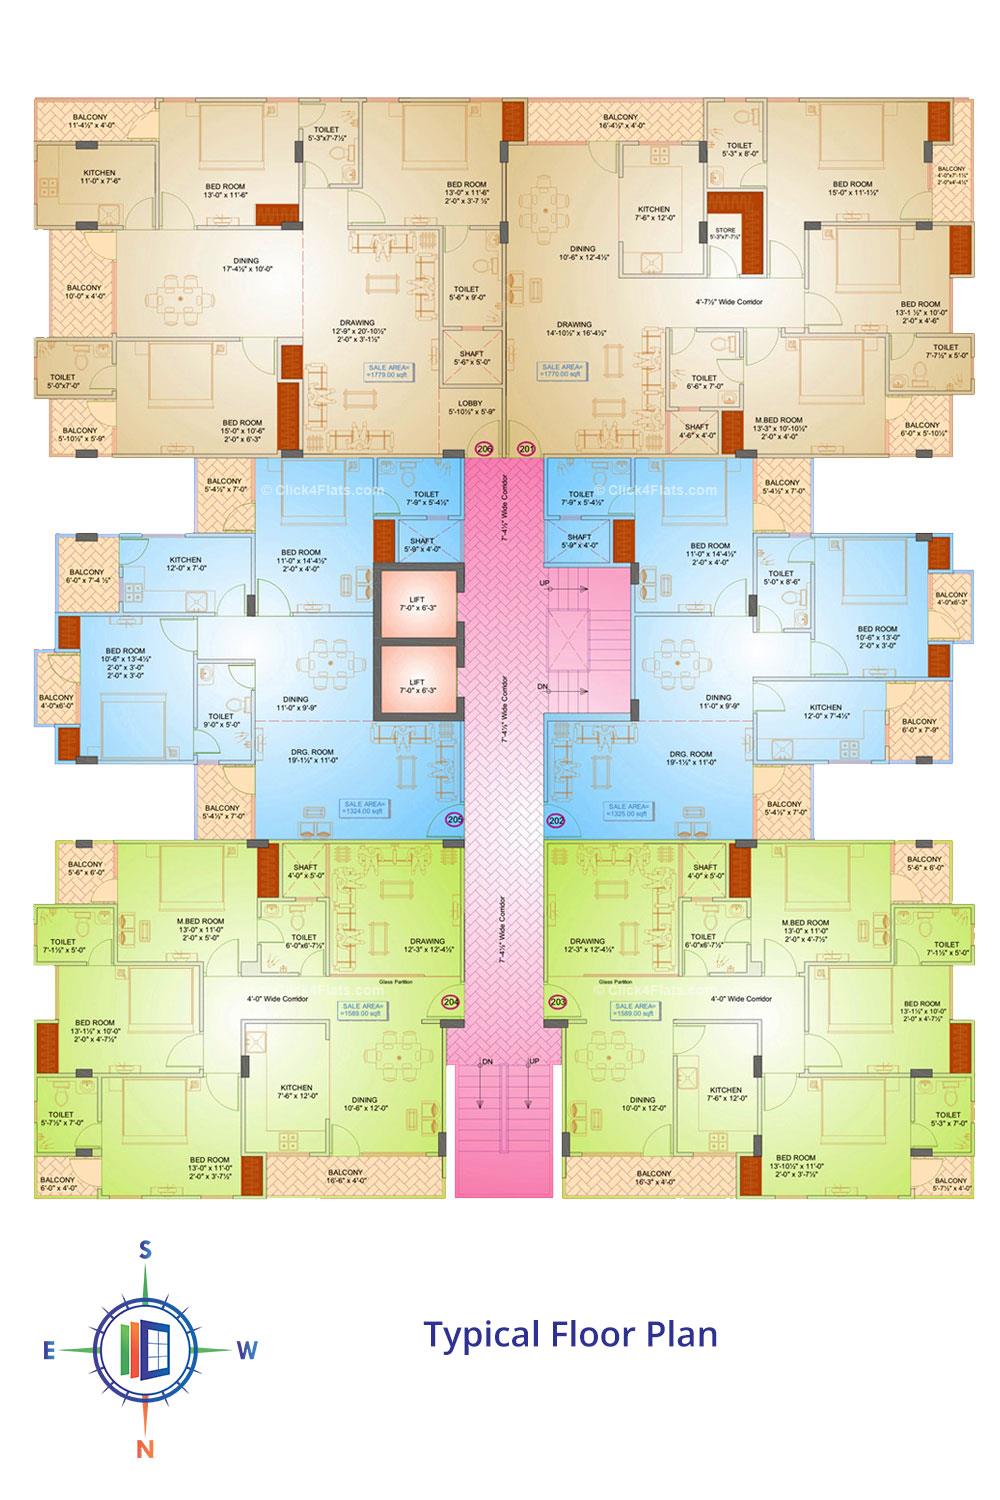 Orient Residency Typical Floor Plan